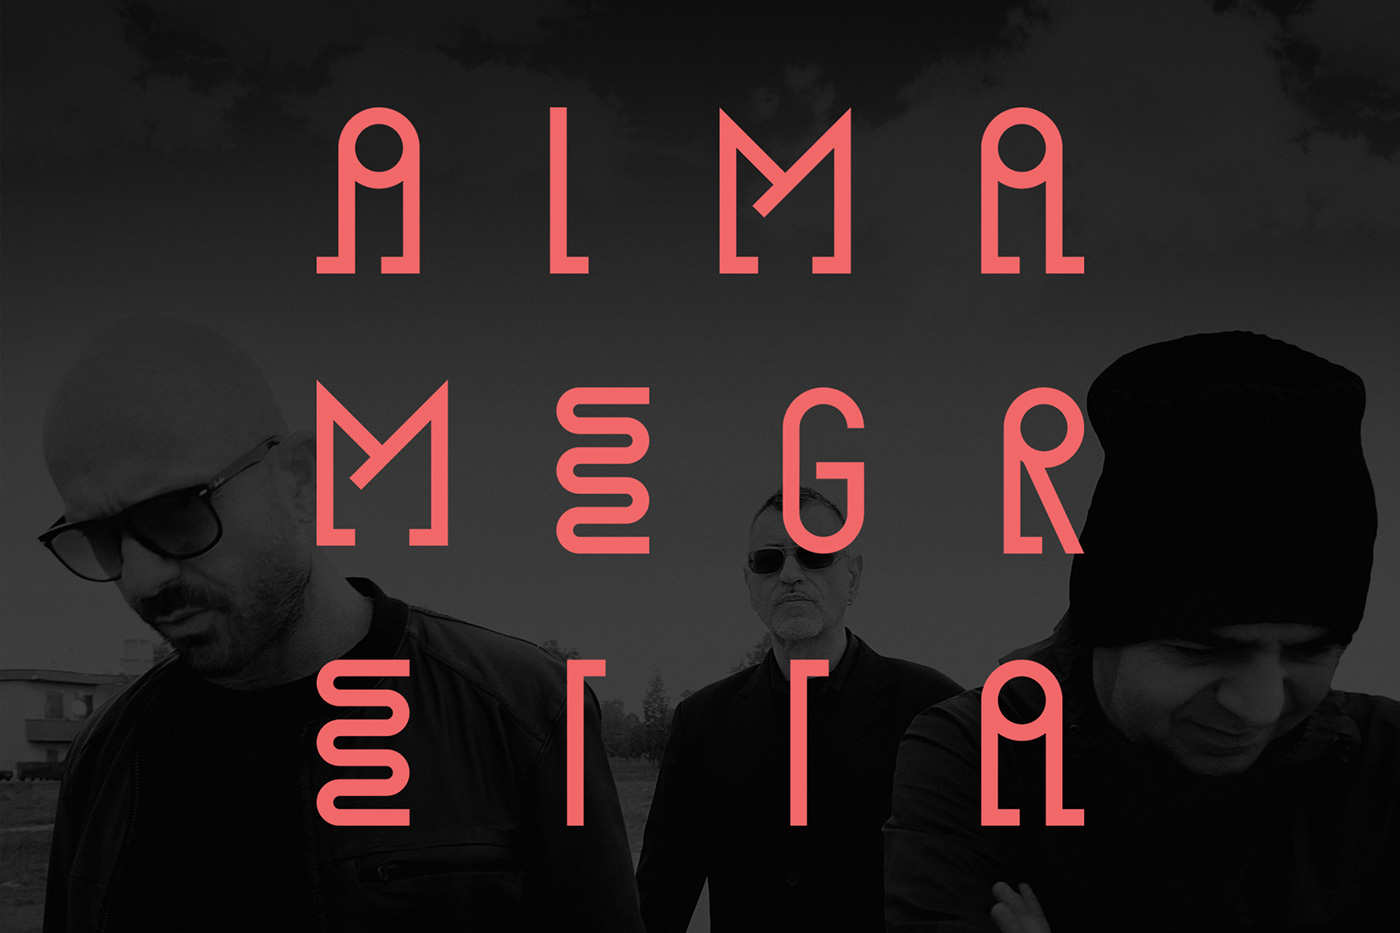 Almamegretta / Ennenne (Goodfellas Records) typography  